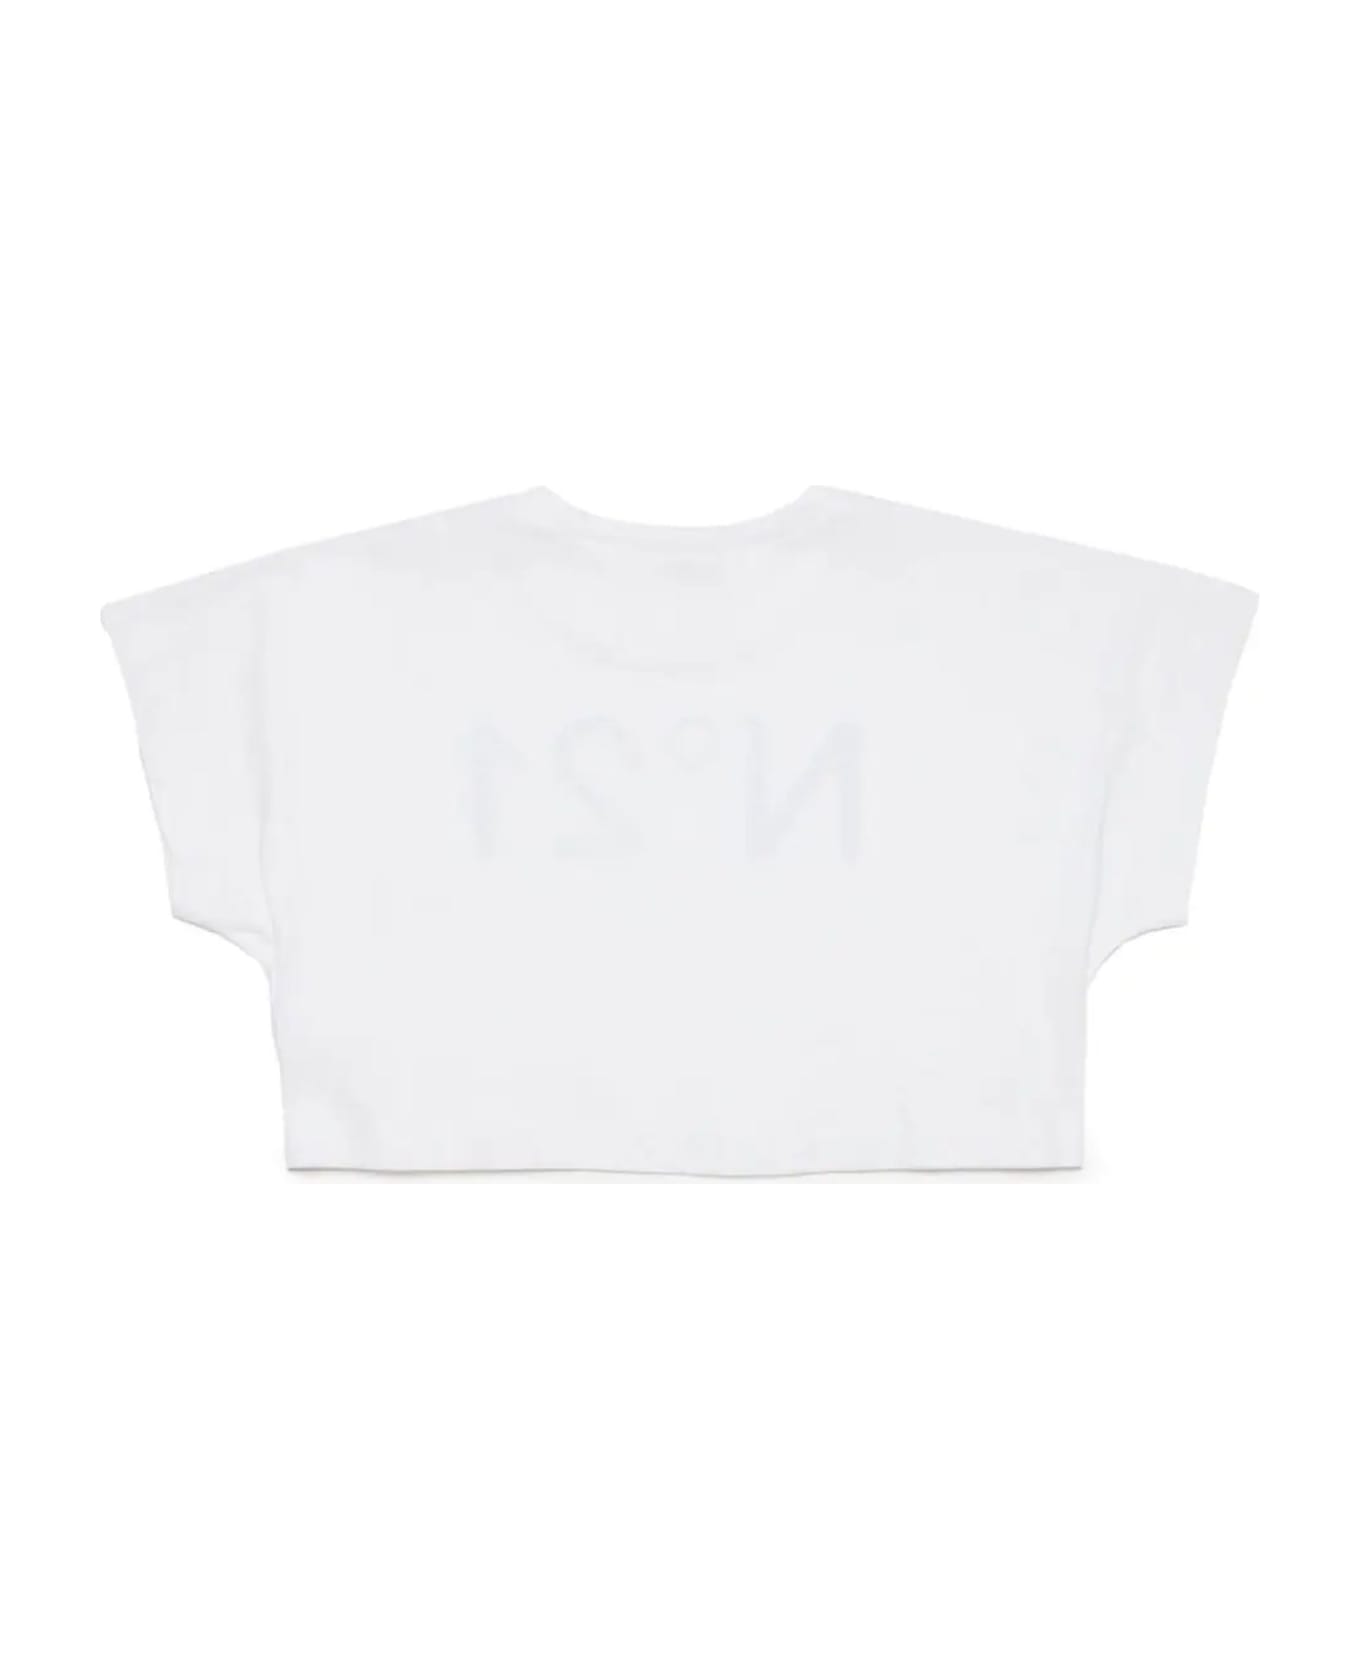 N.21 N°21 T-shirts And Polos White - White